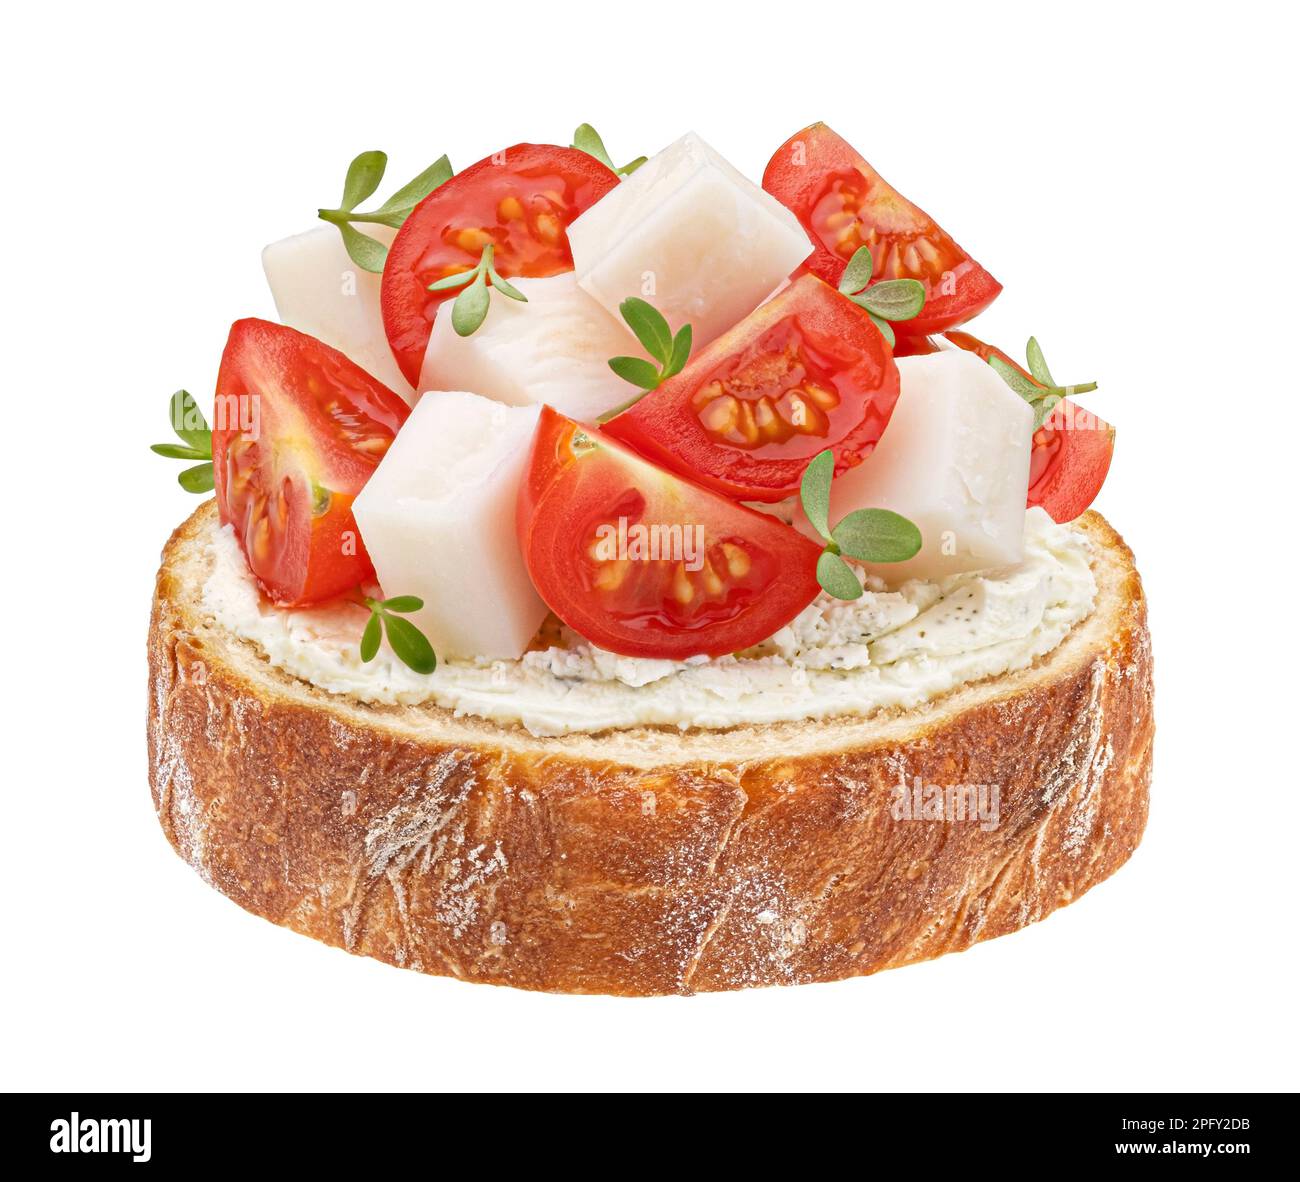 Bruschetta with tomatoes and mozzarella isolated on white background Stock Photo